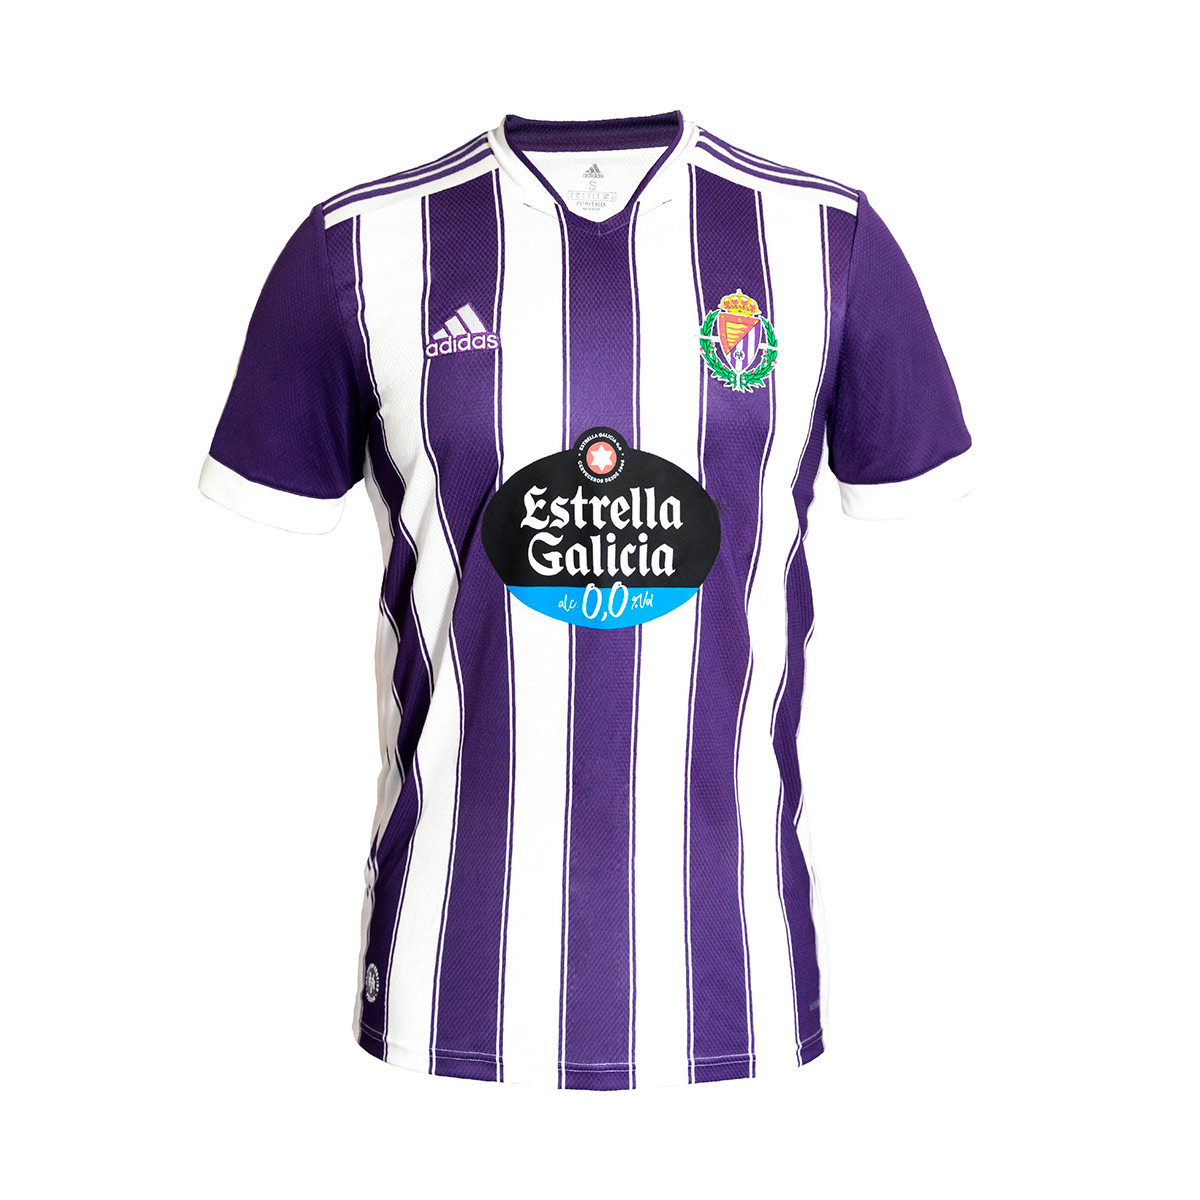 صور استنسل Jersey adidas Real Valladolid Club de Fútbol Home Jersey 2021-2022 ... صور استنسل